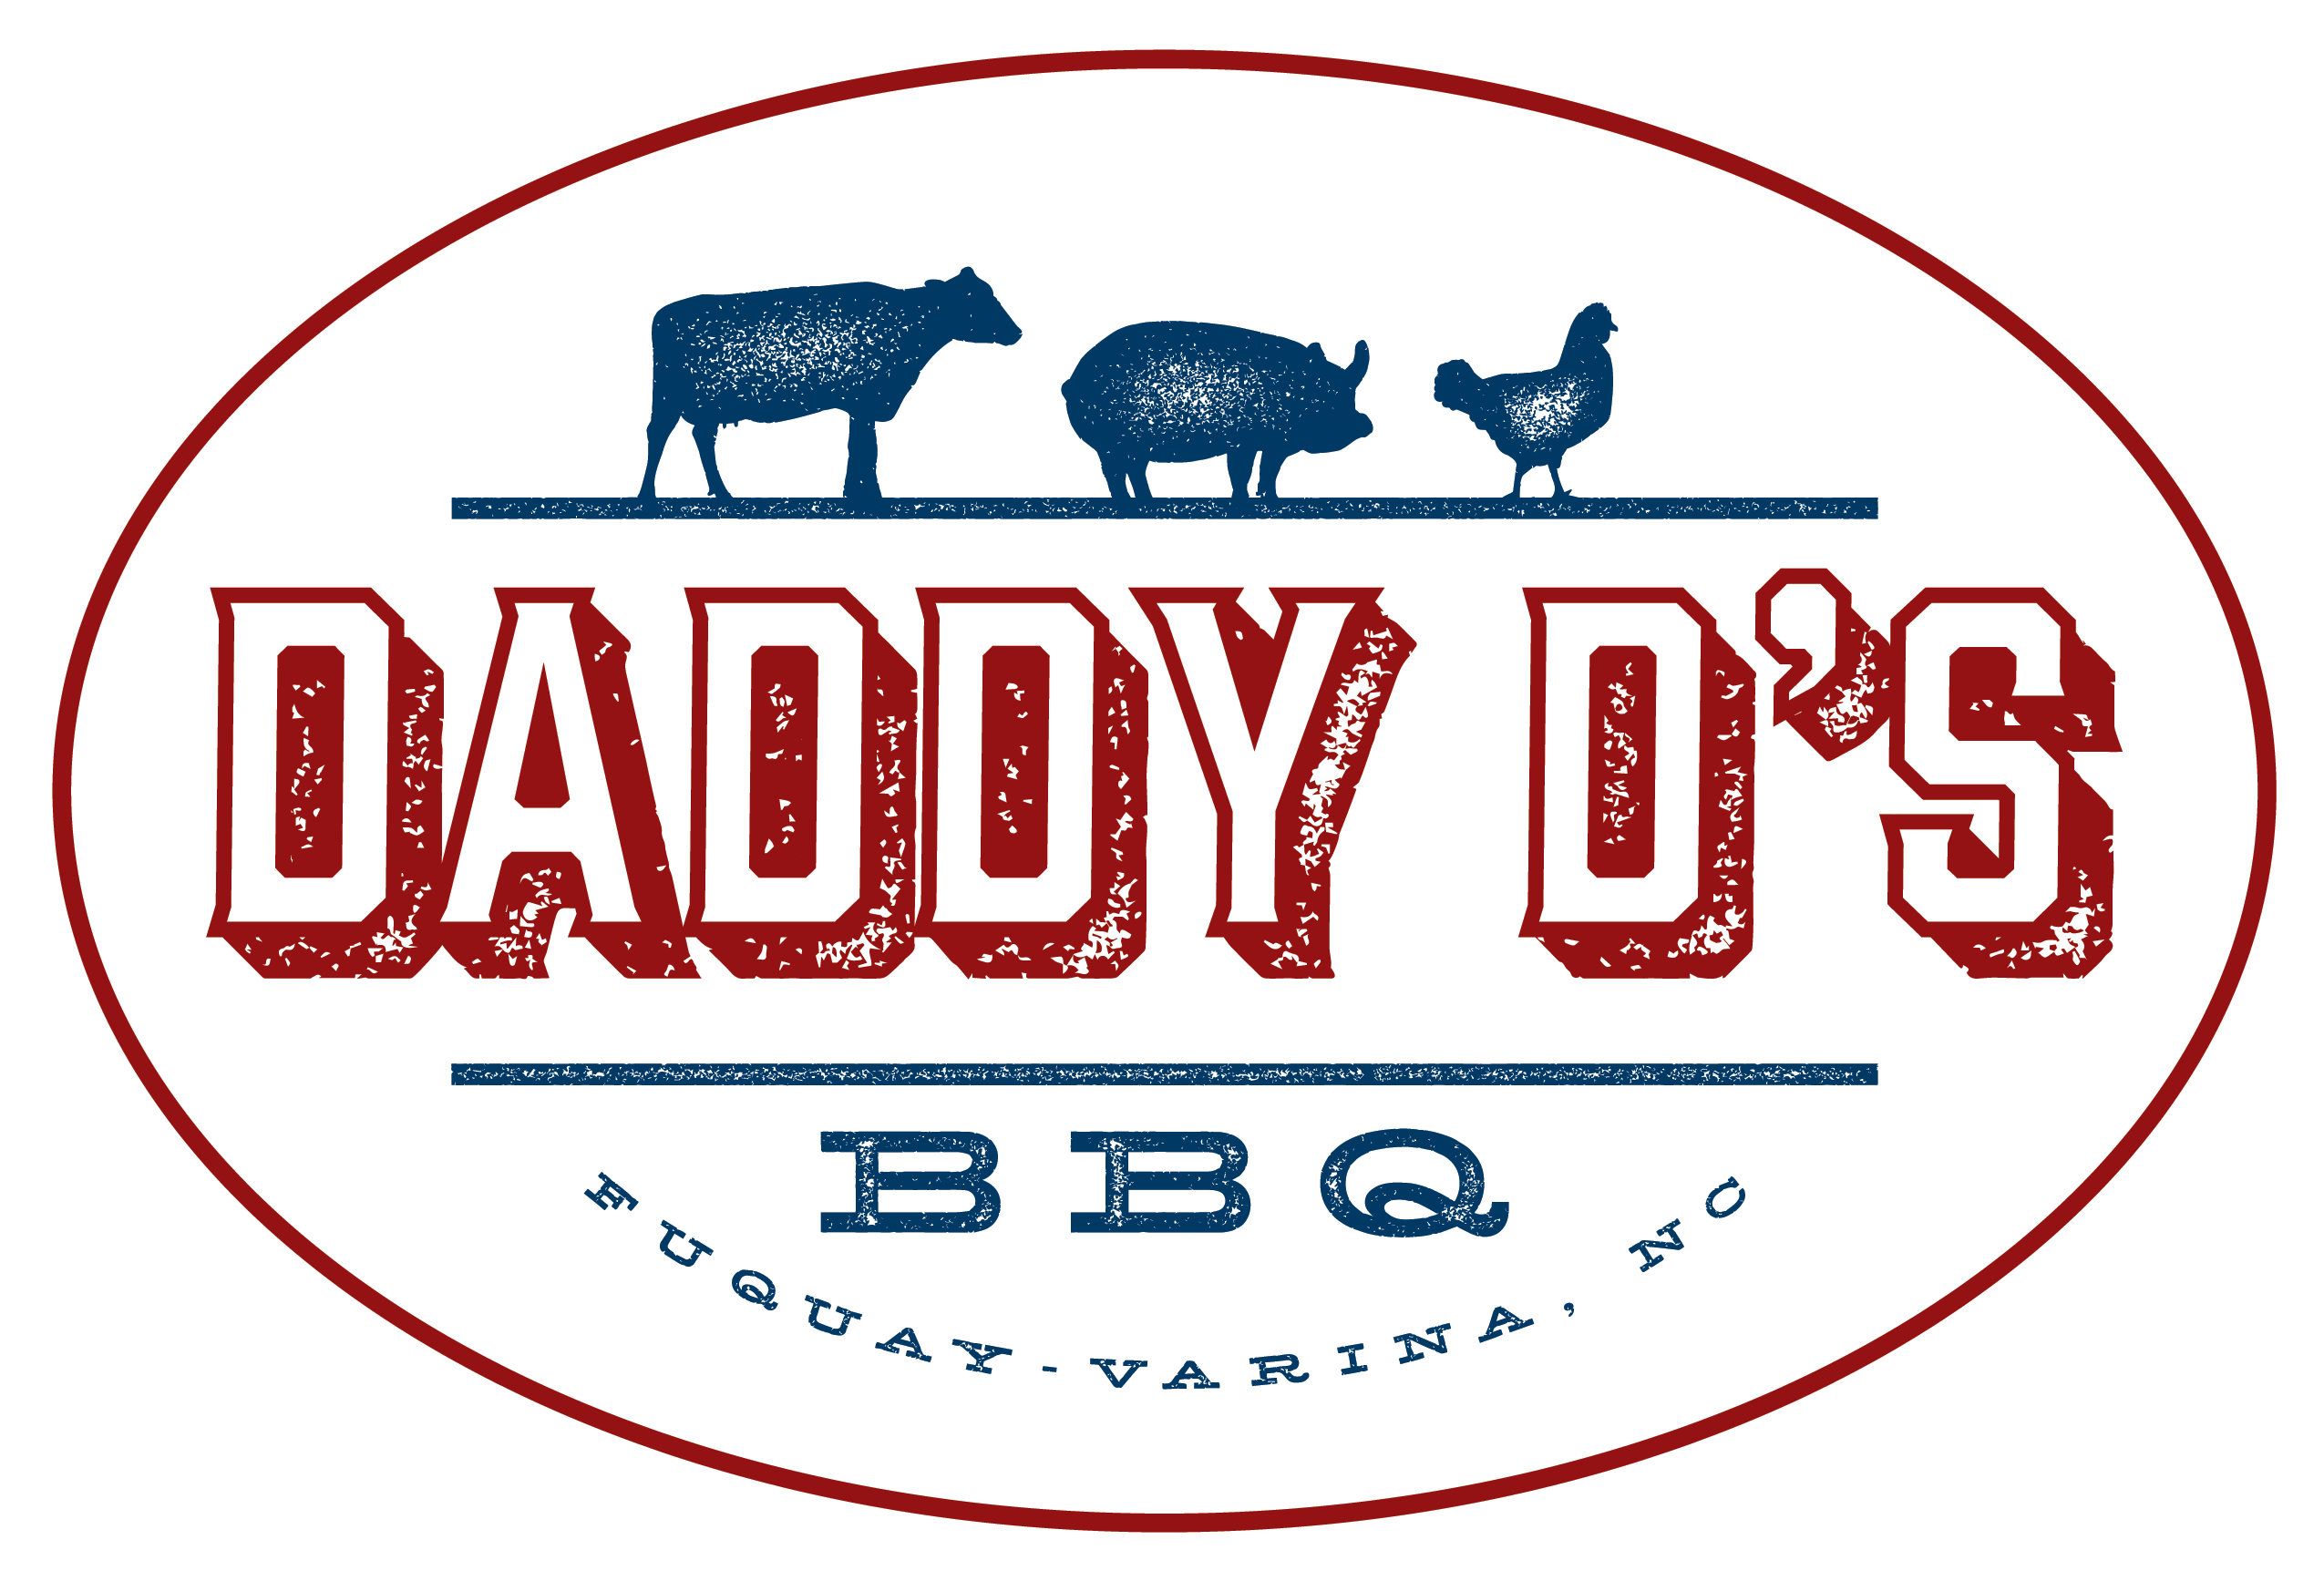 Daddy D's BBQ of Benson